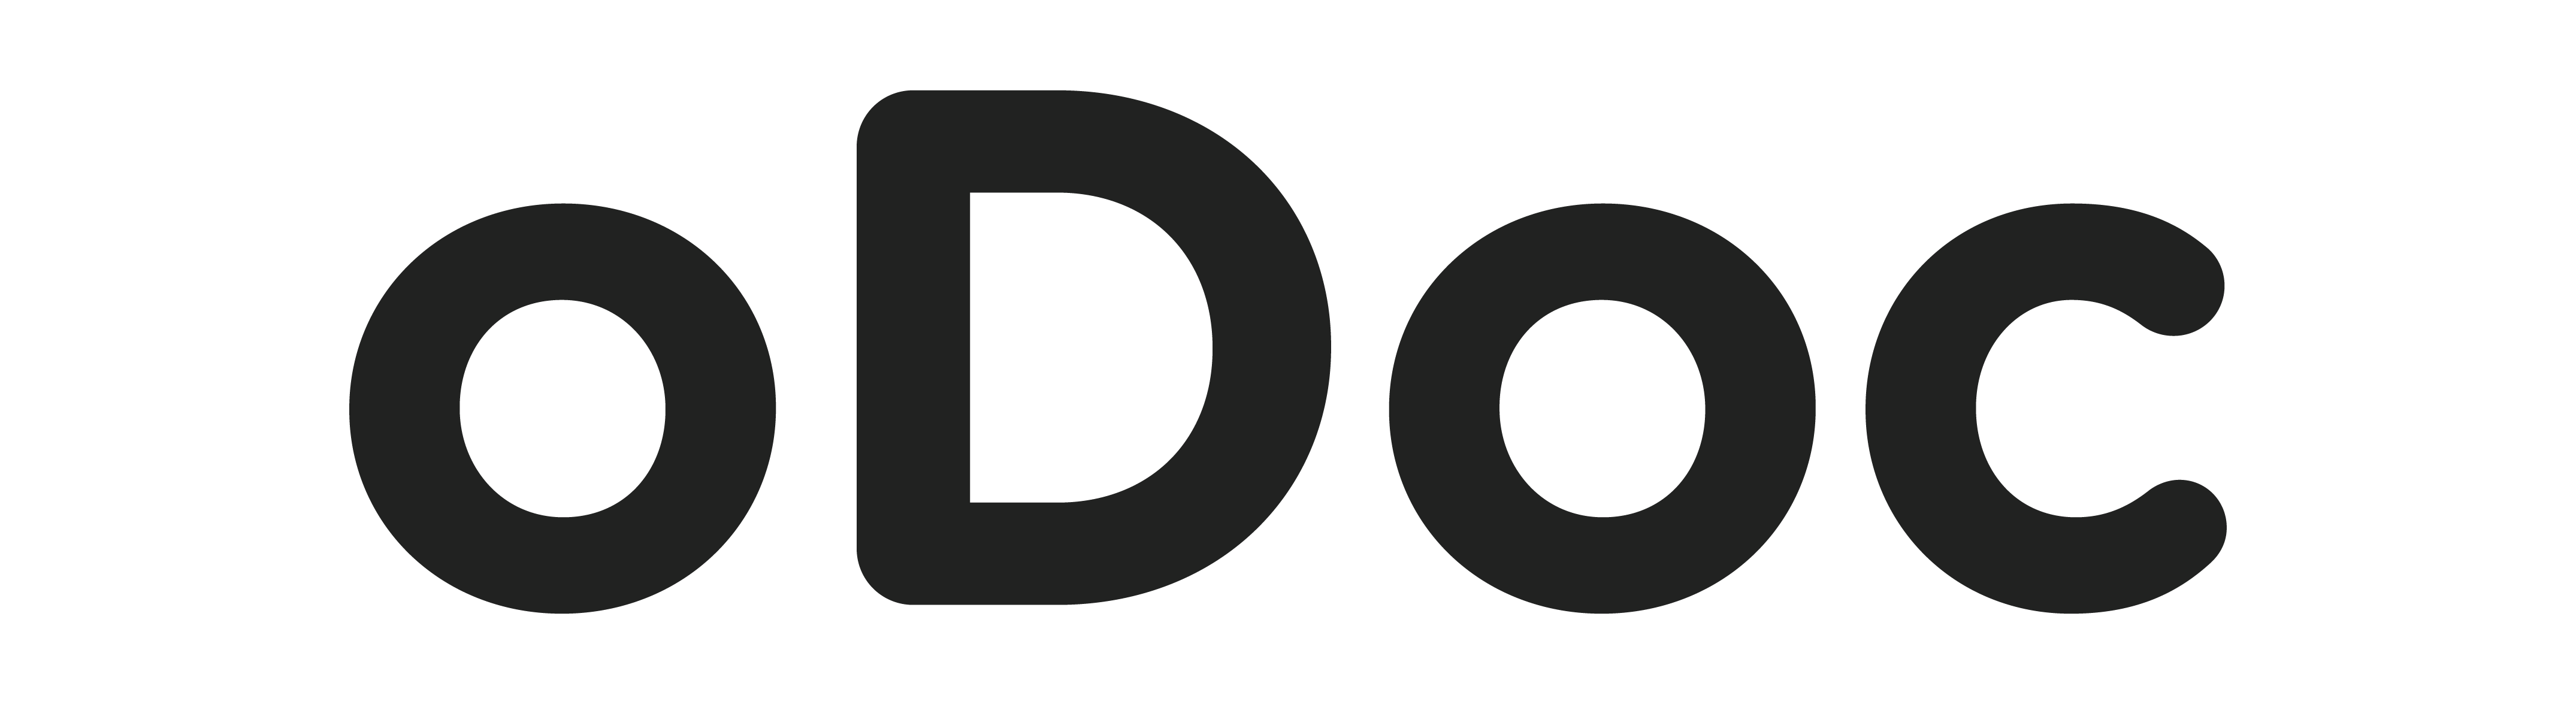 Odoc black logo 1032x282 01